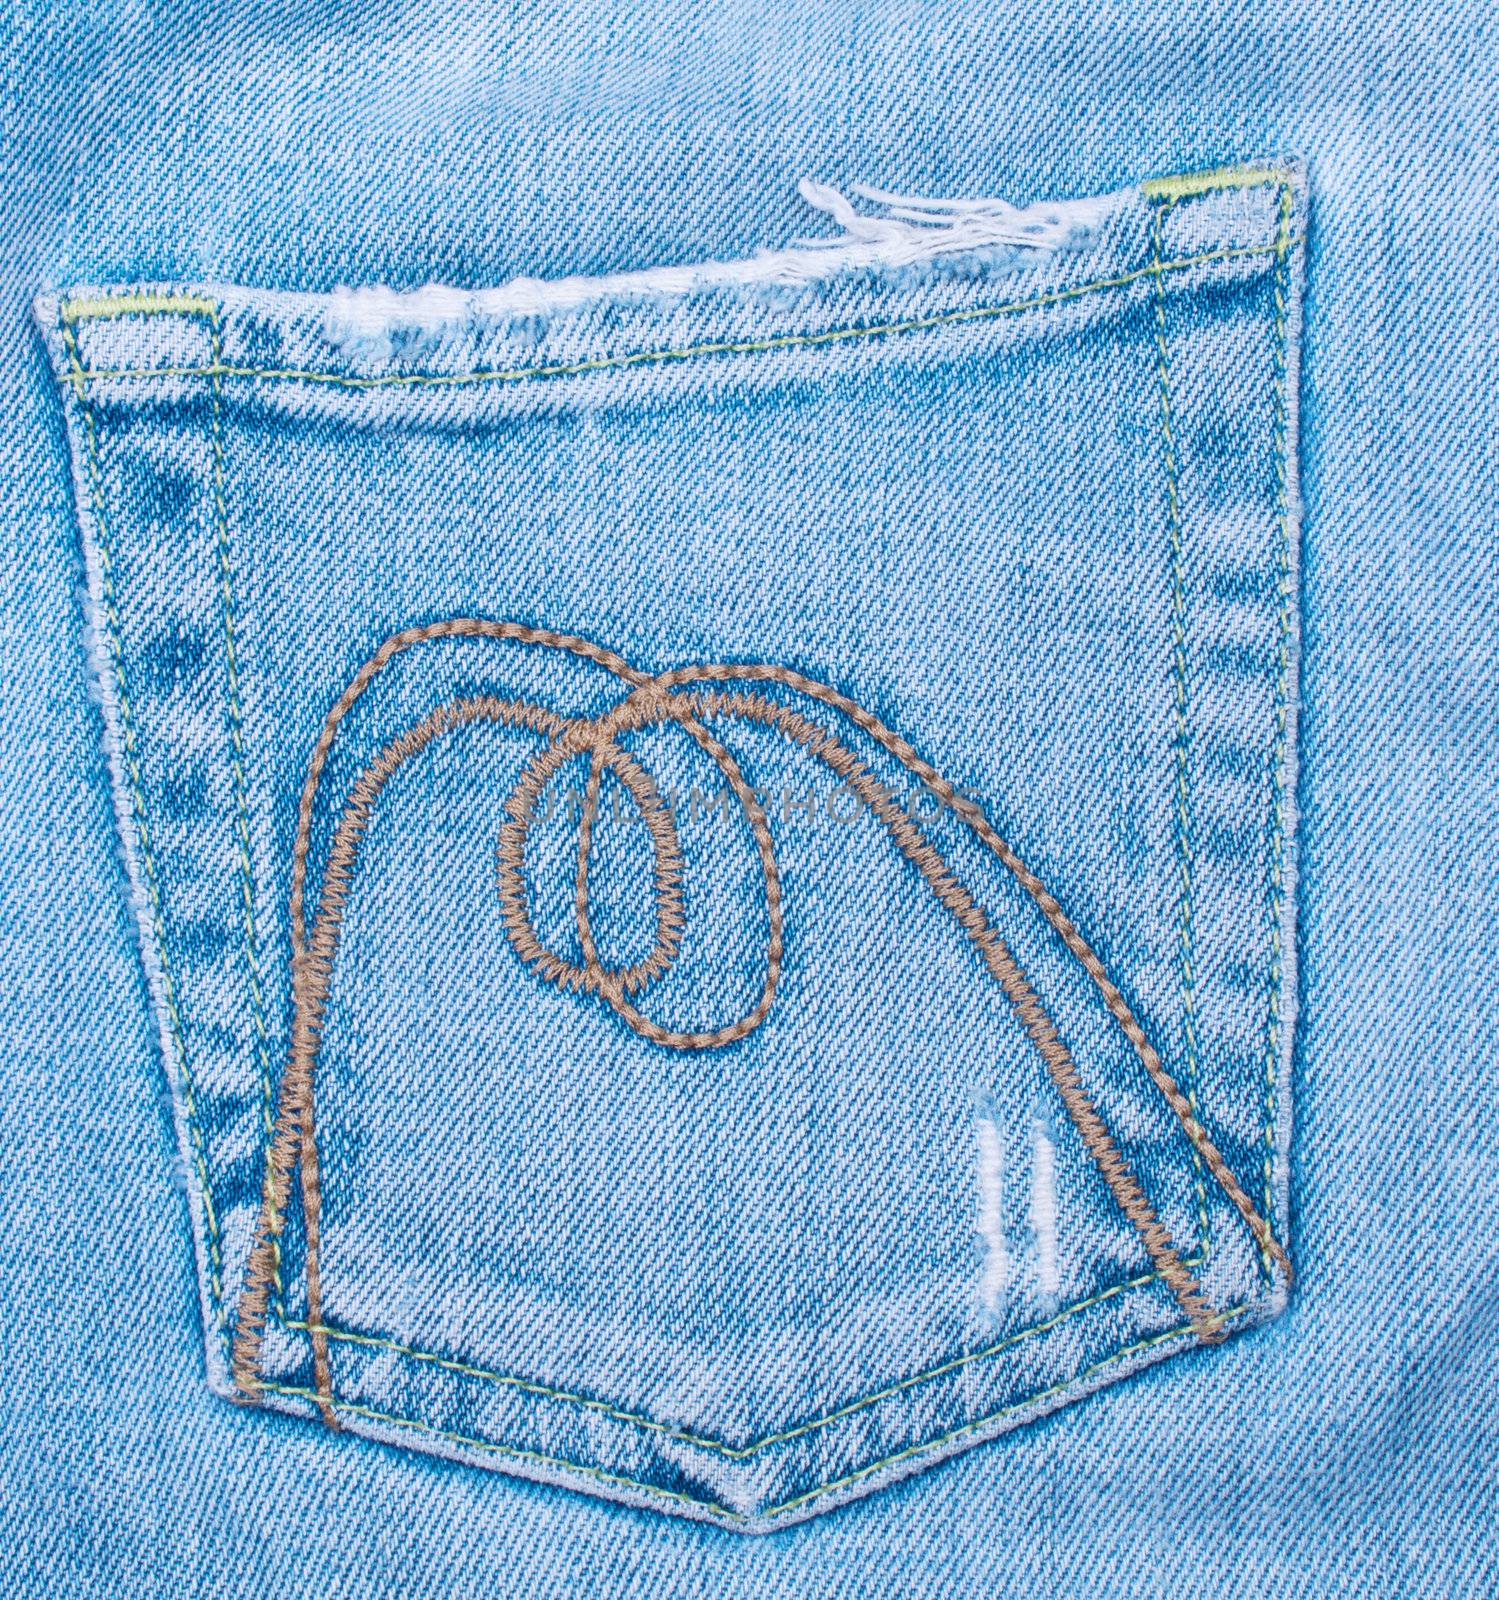 Jeans pocket by Nanisimova